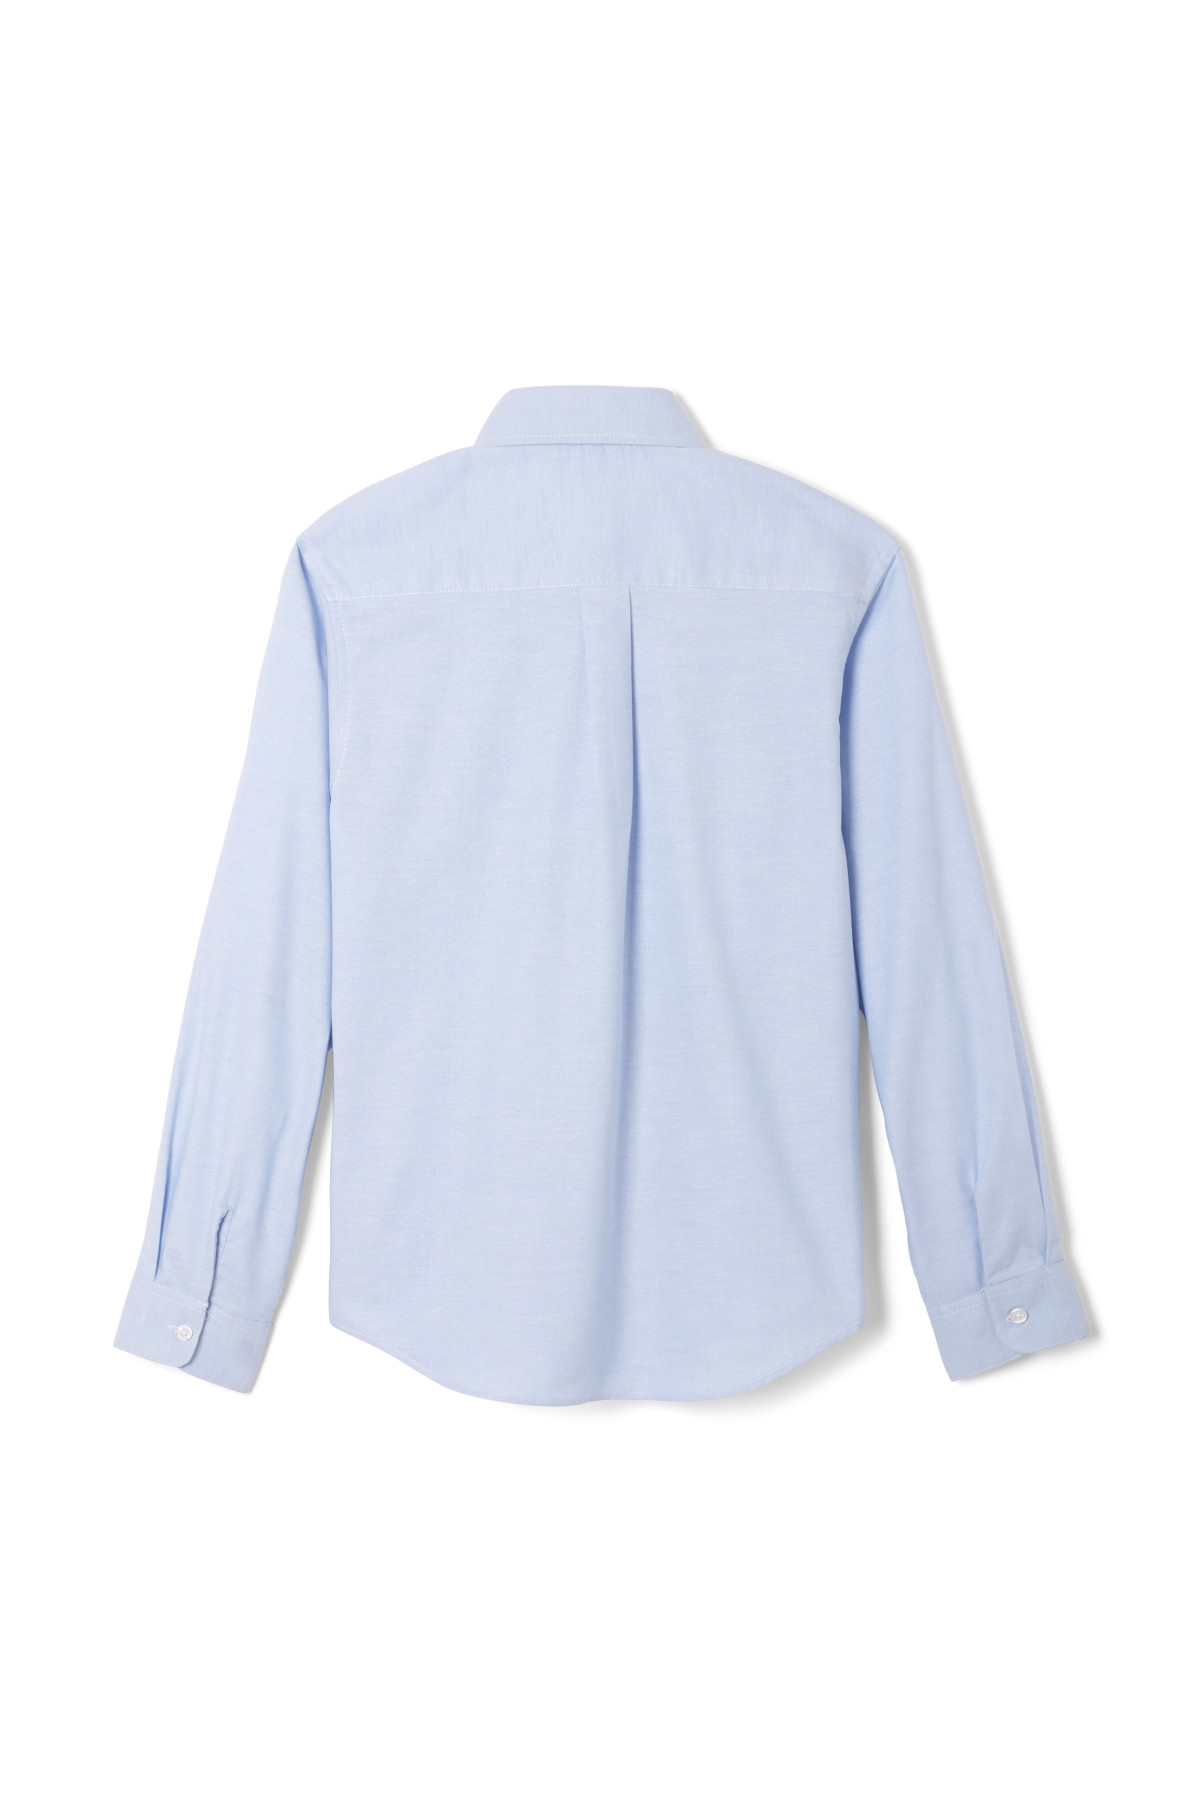 Blue French Toast School Uniform Boys Short Sleeve Classic Dress Shirt 14 